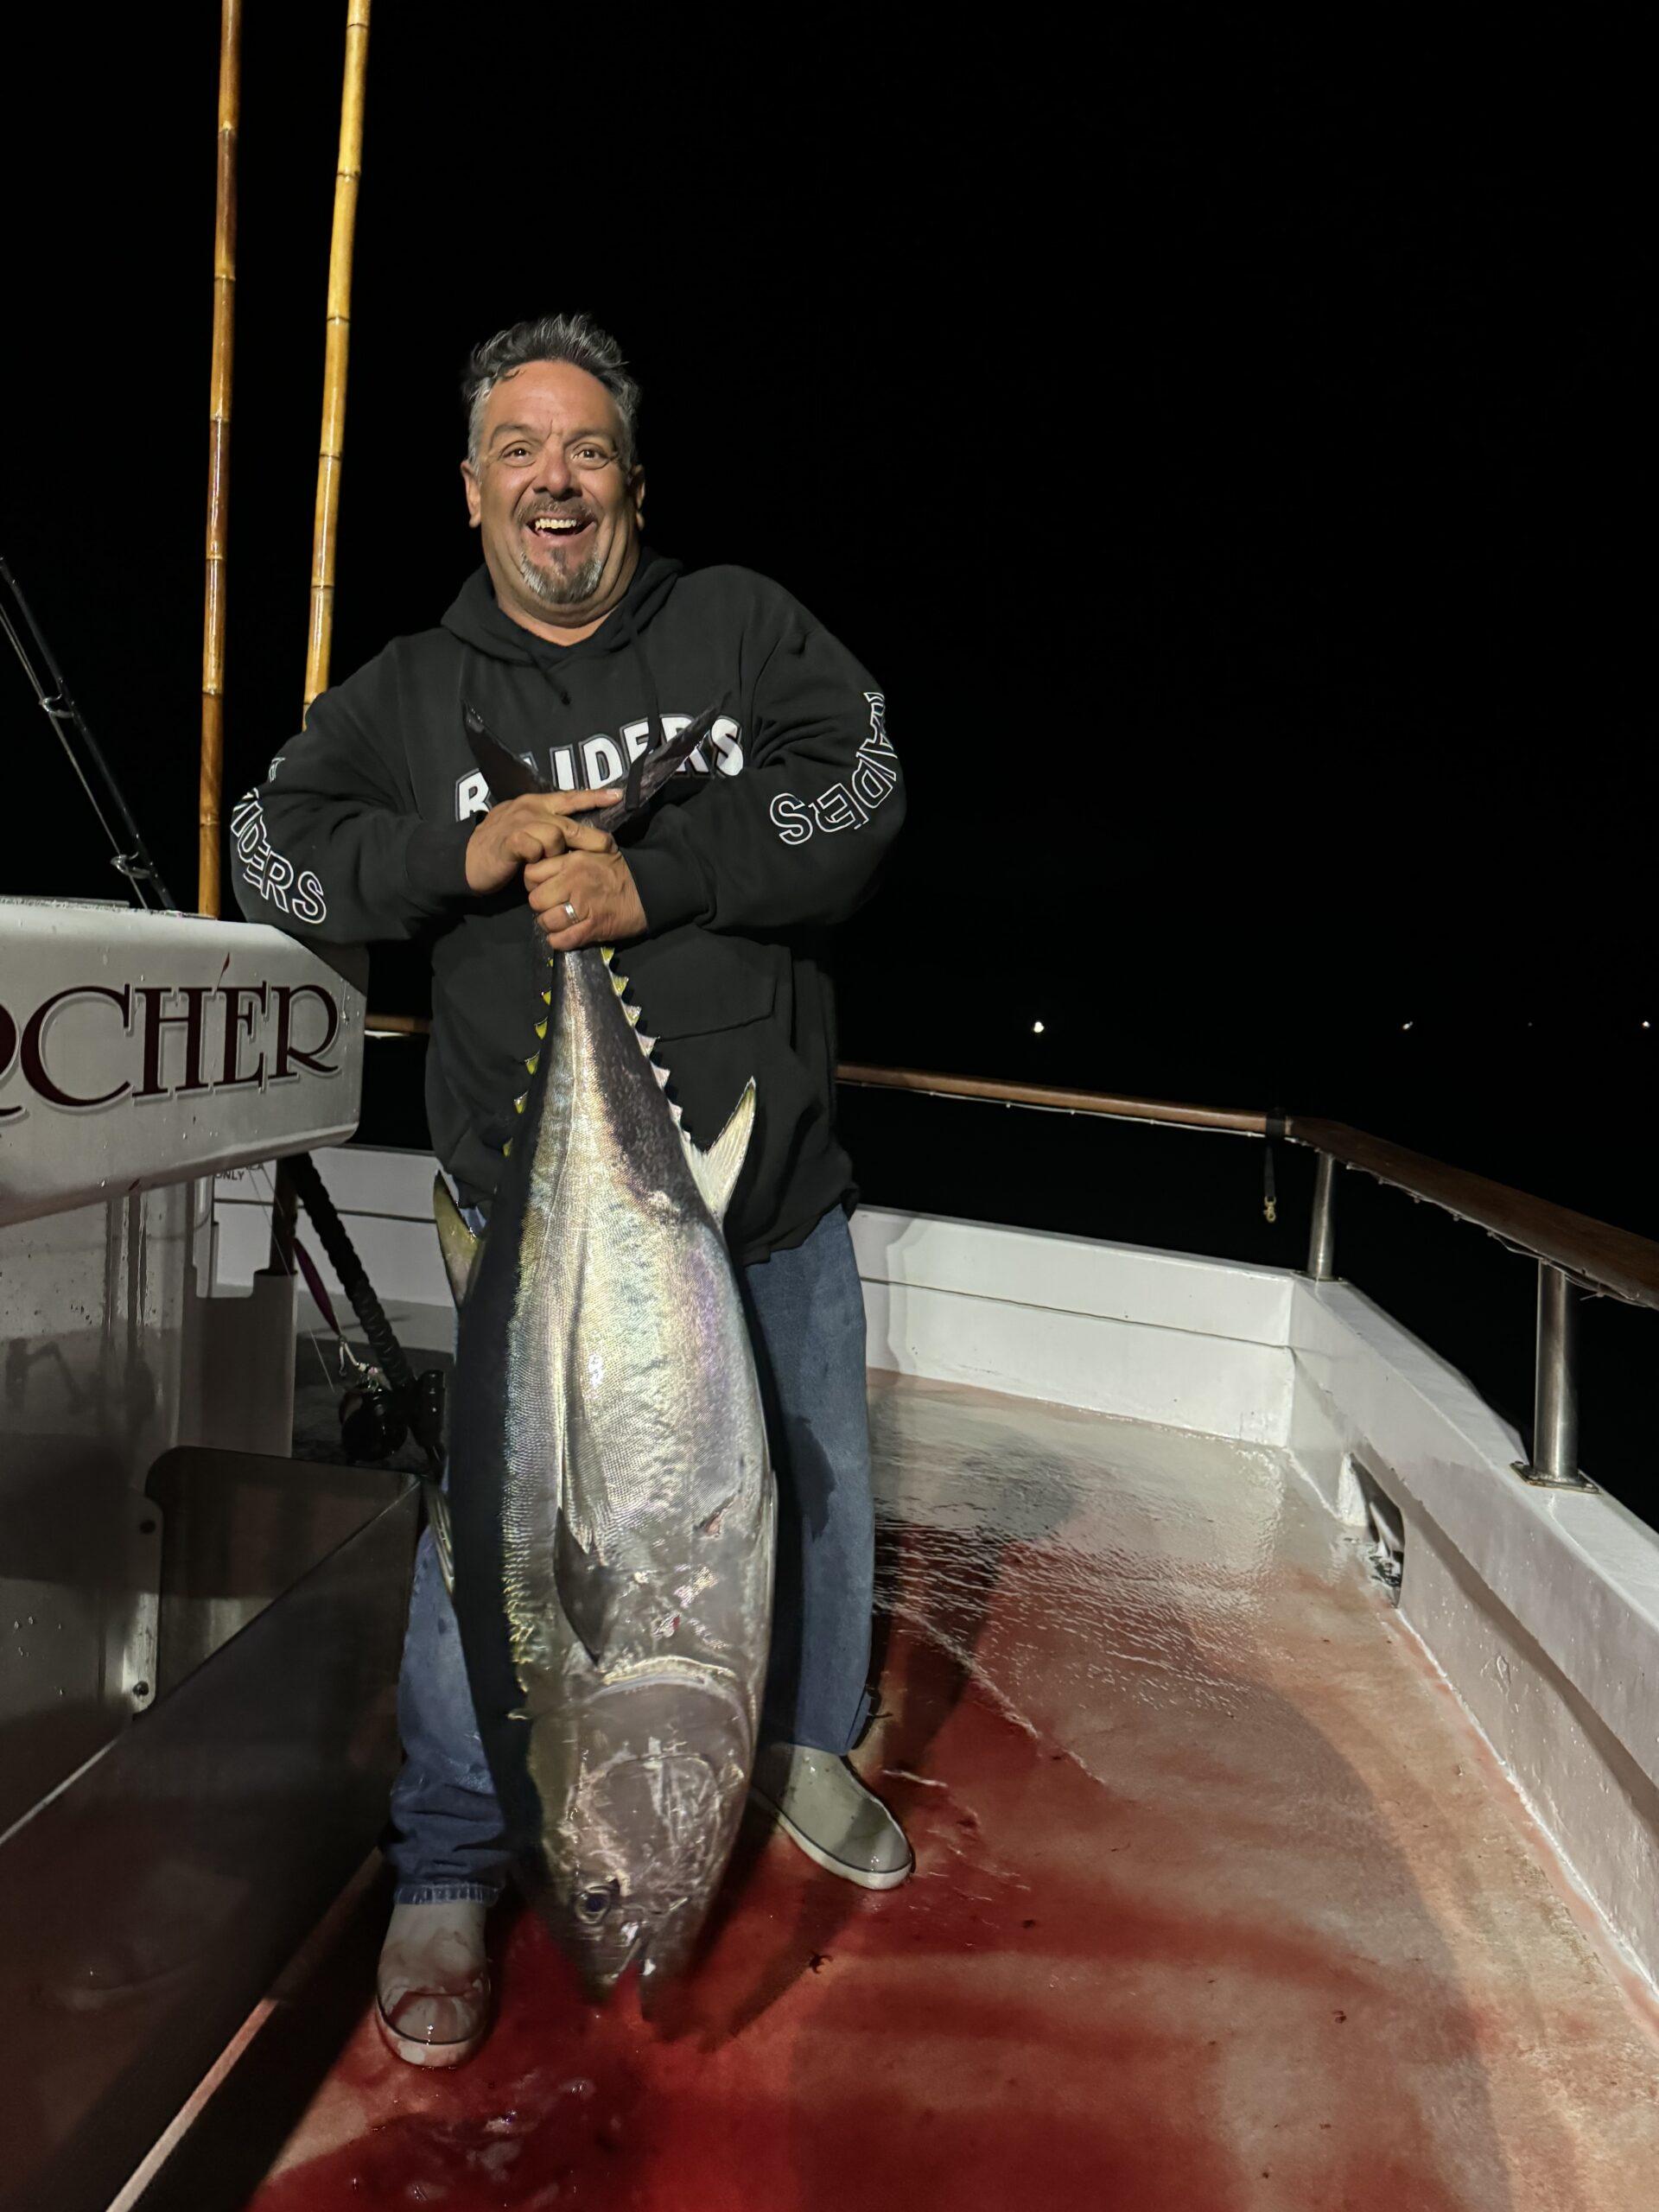 Angler with a 100-pounder bluefin tuna!